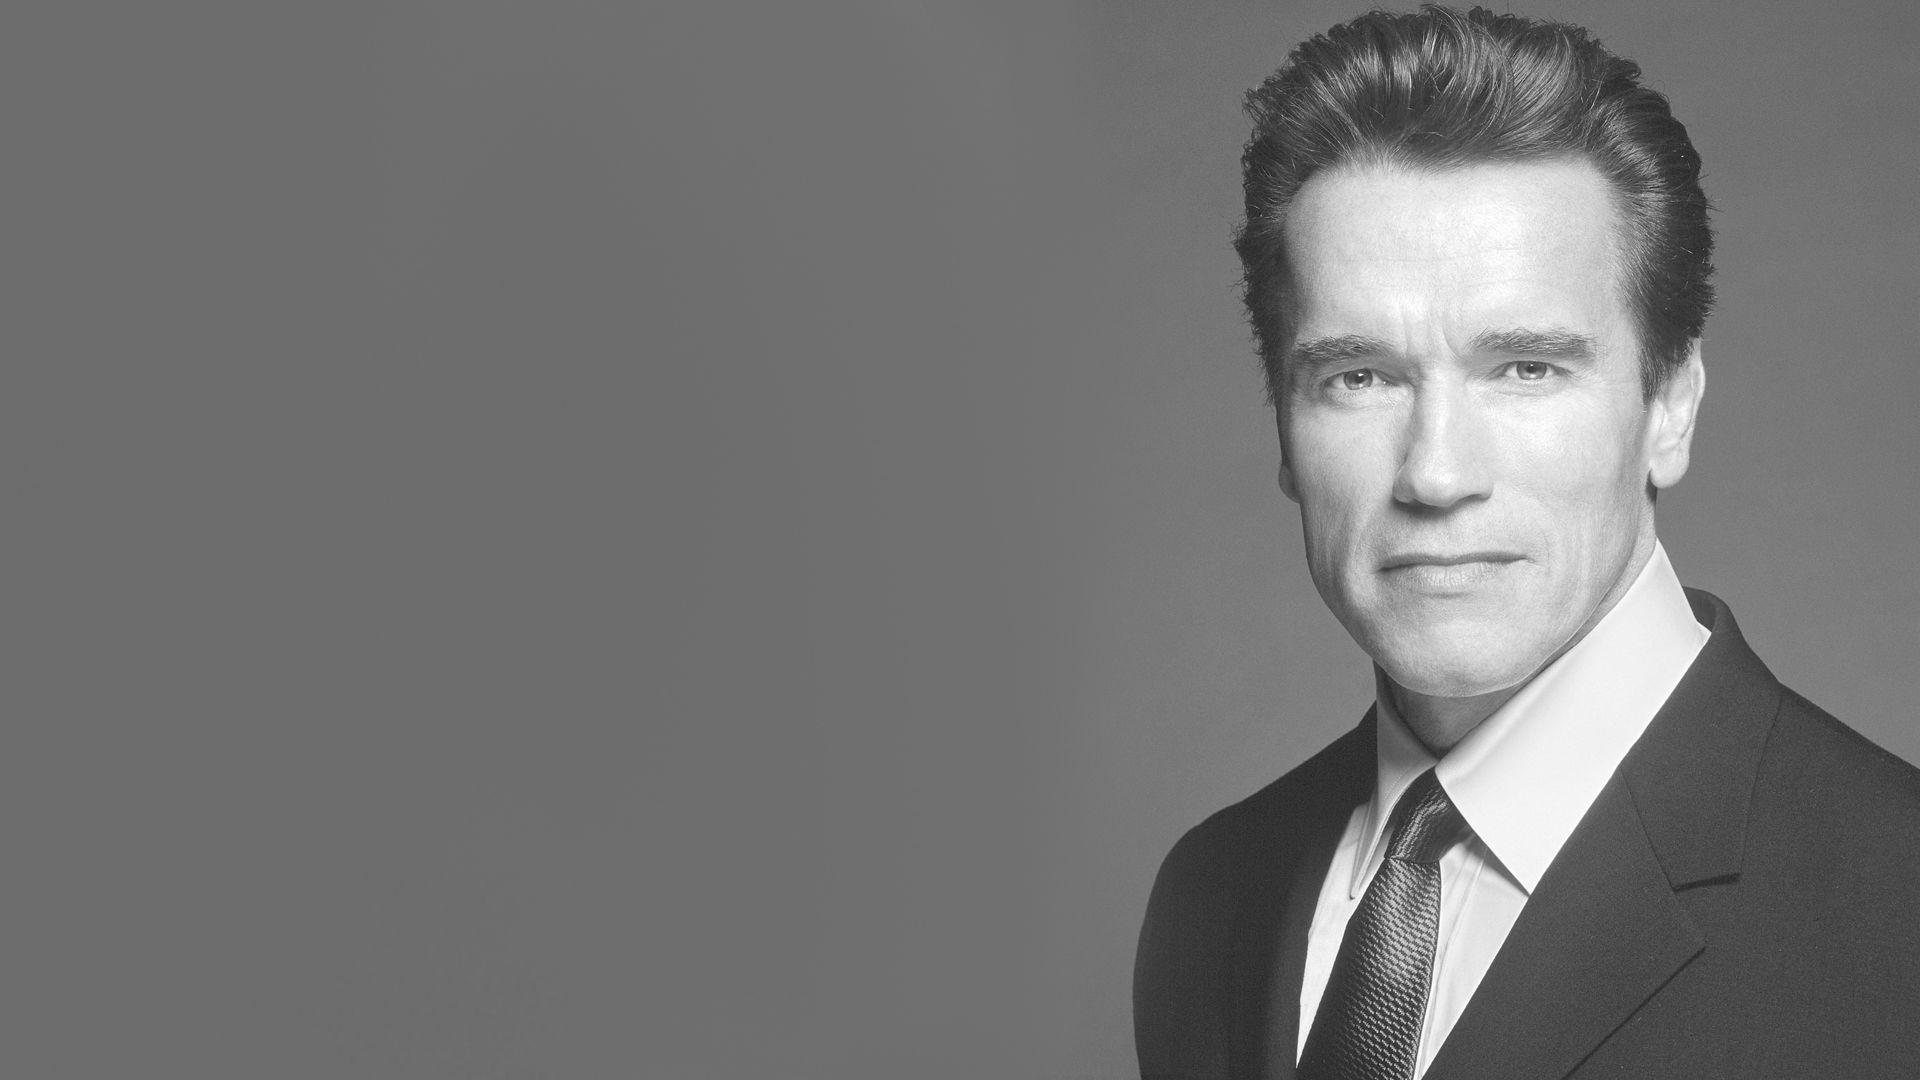 Monochrome Arnold Schwarzenegger Wallpaper 54961 1920x1080 px